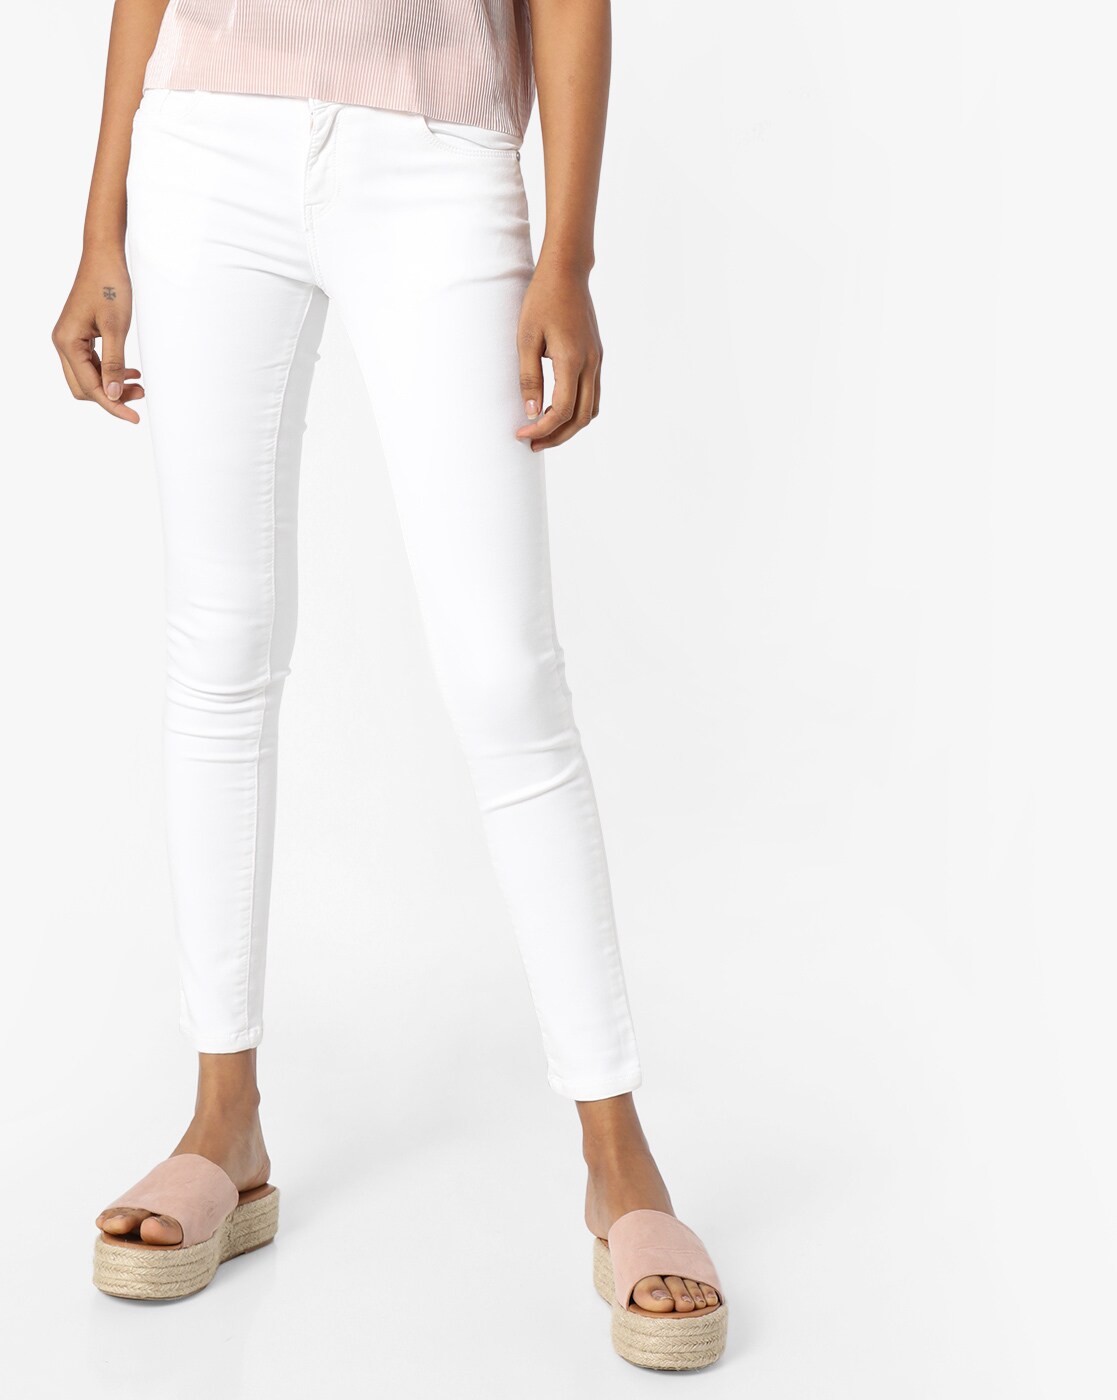 kraus white jeans